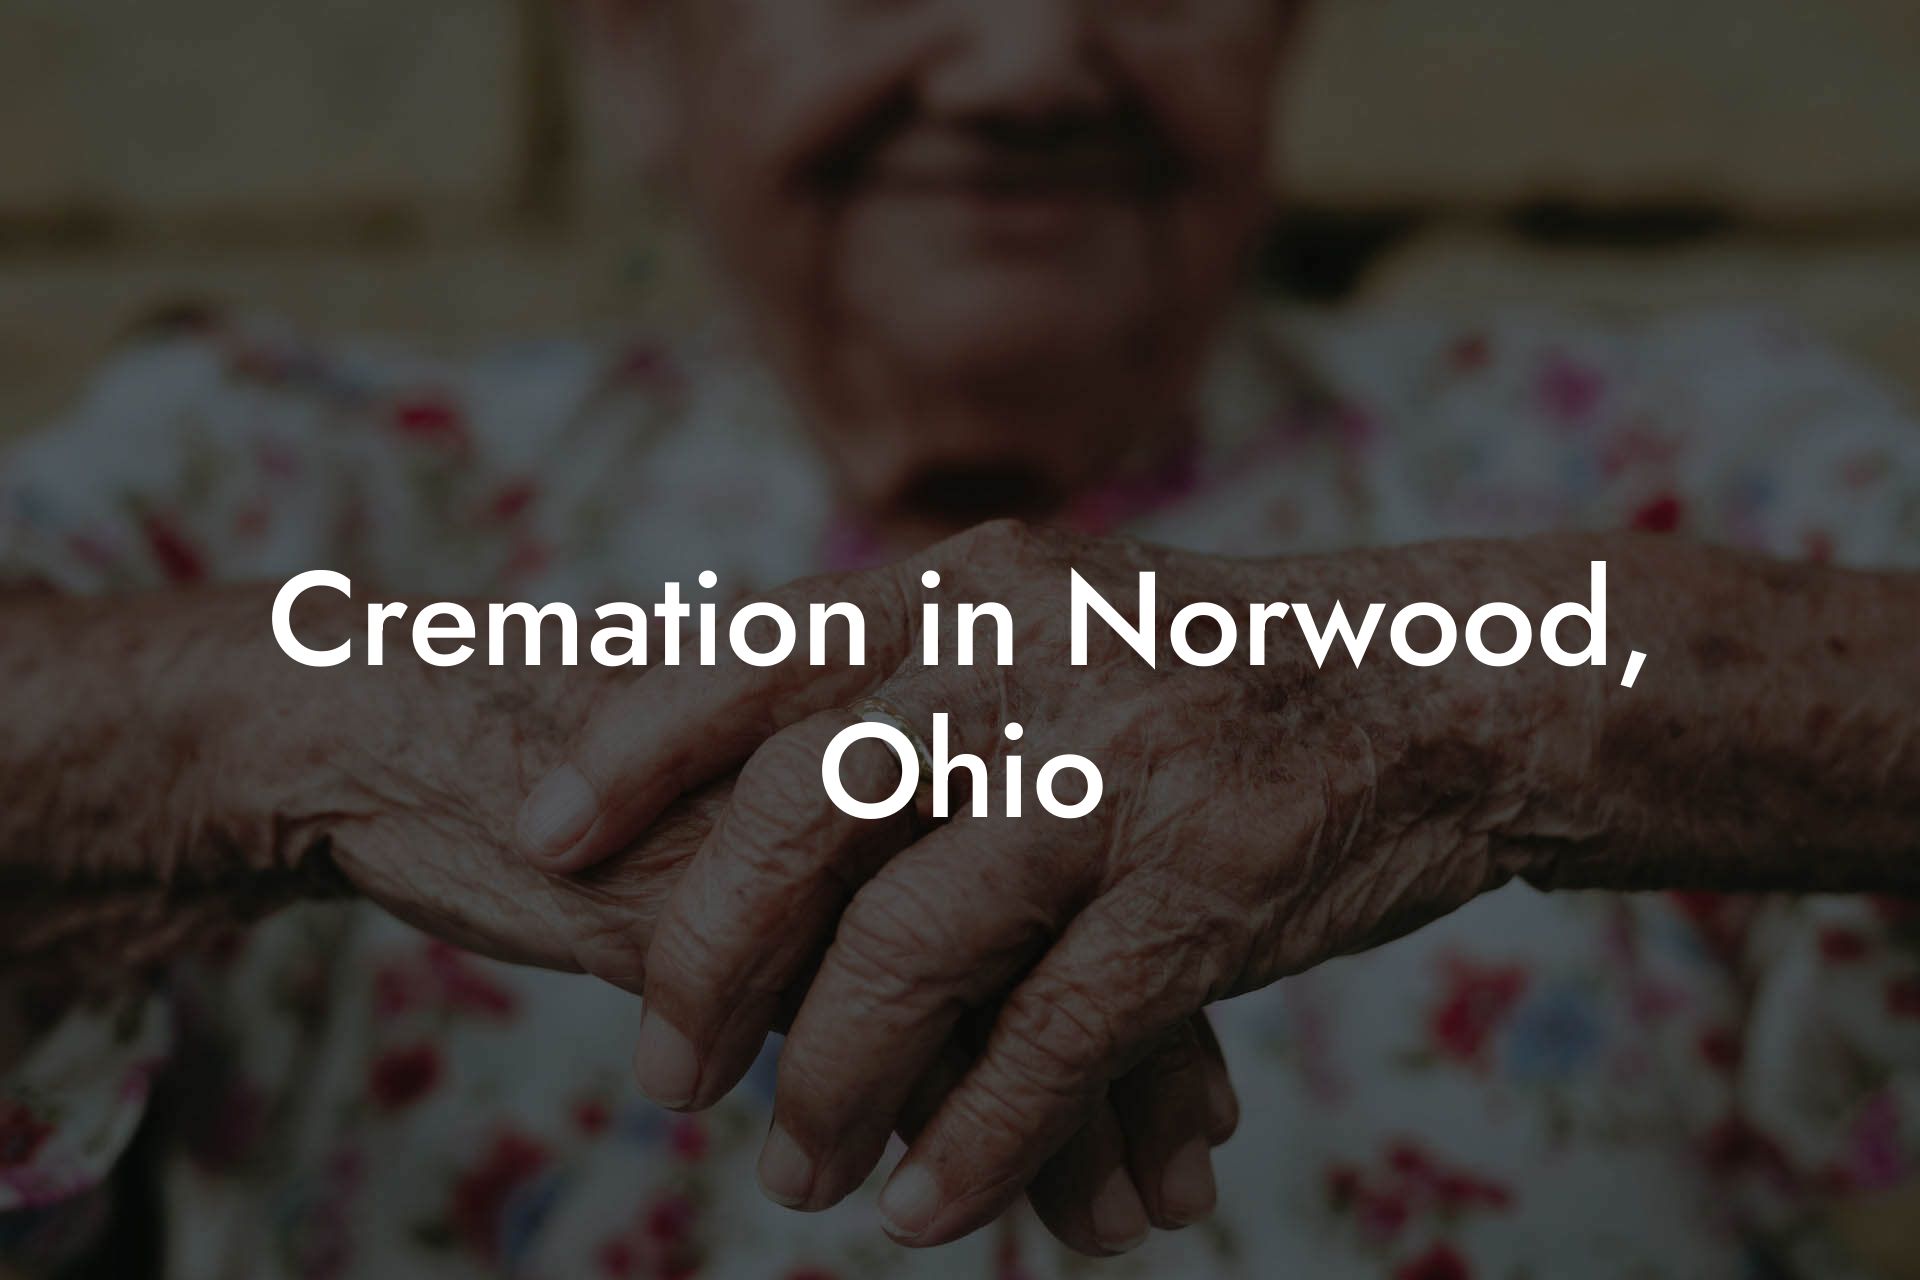 Cremation in Norwood, Ohio